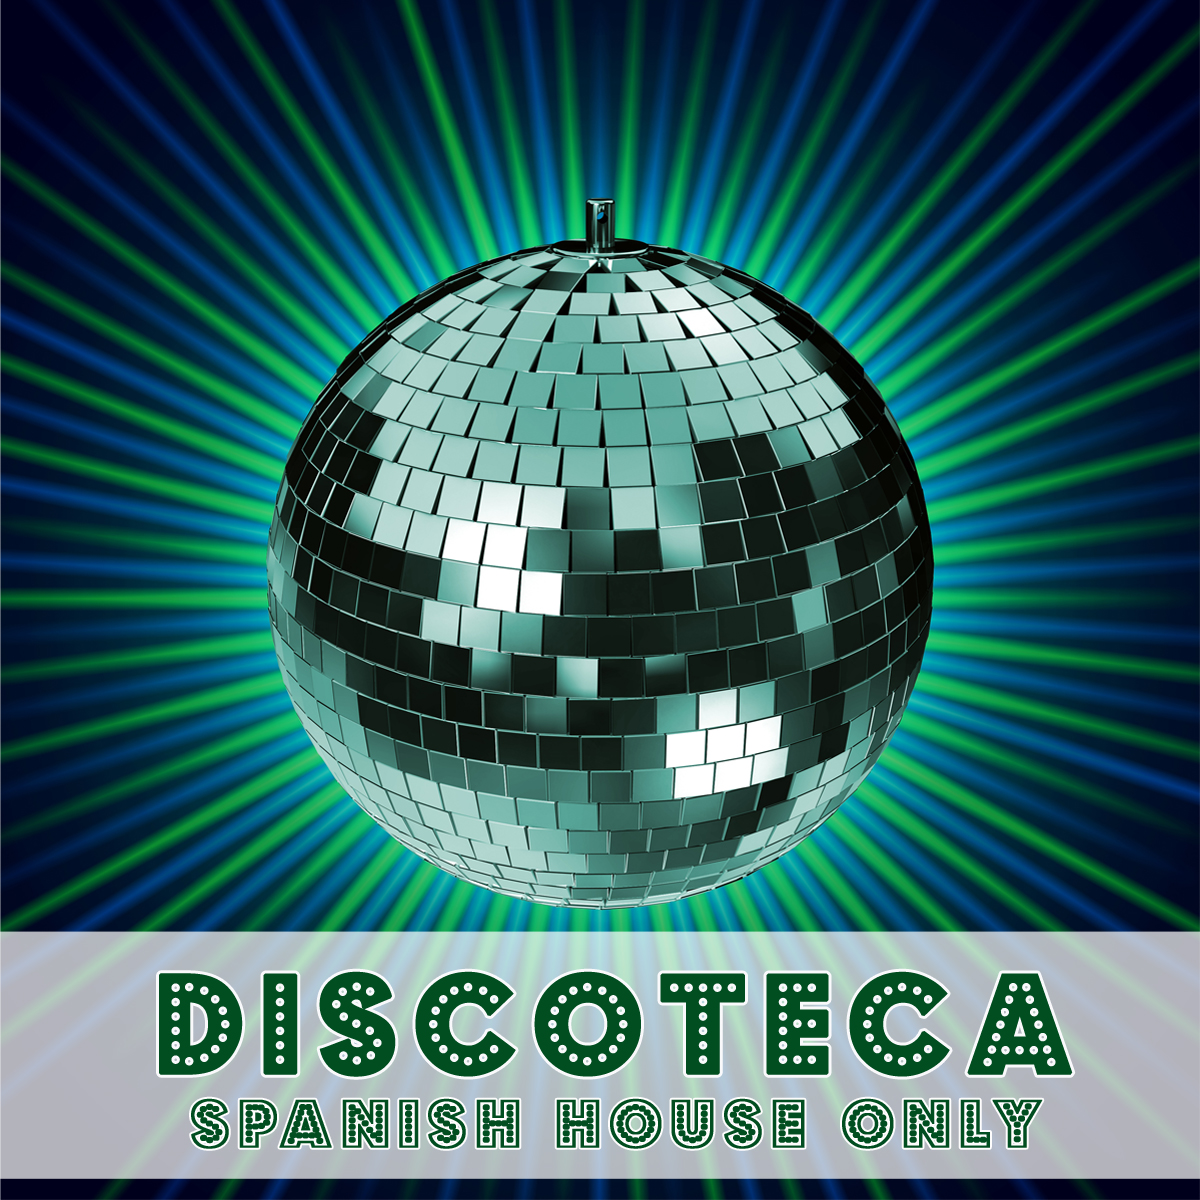 Discoteca - Spanish House Only